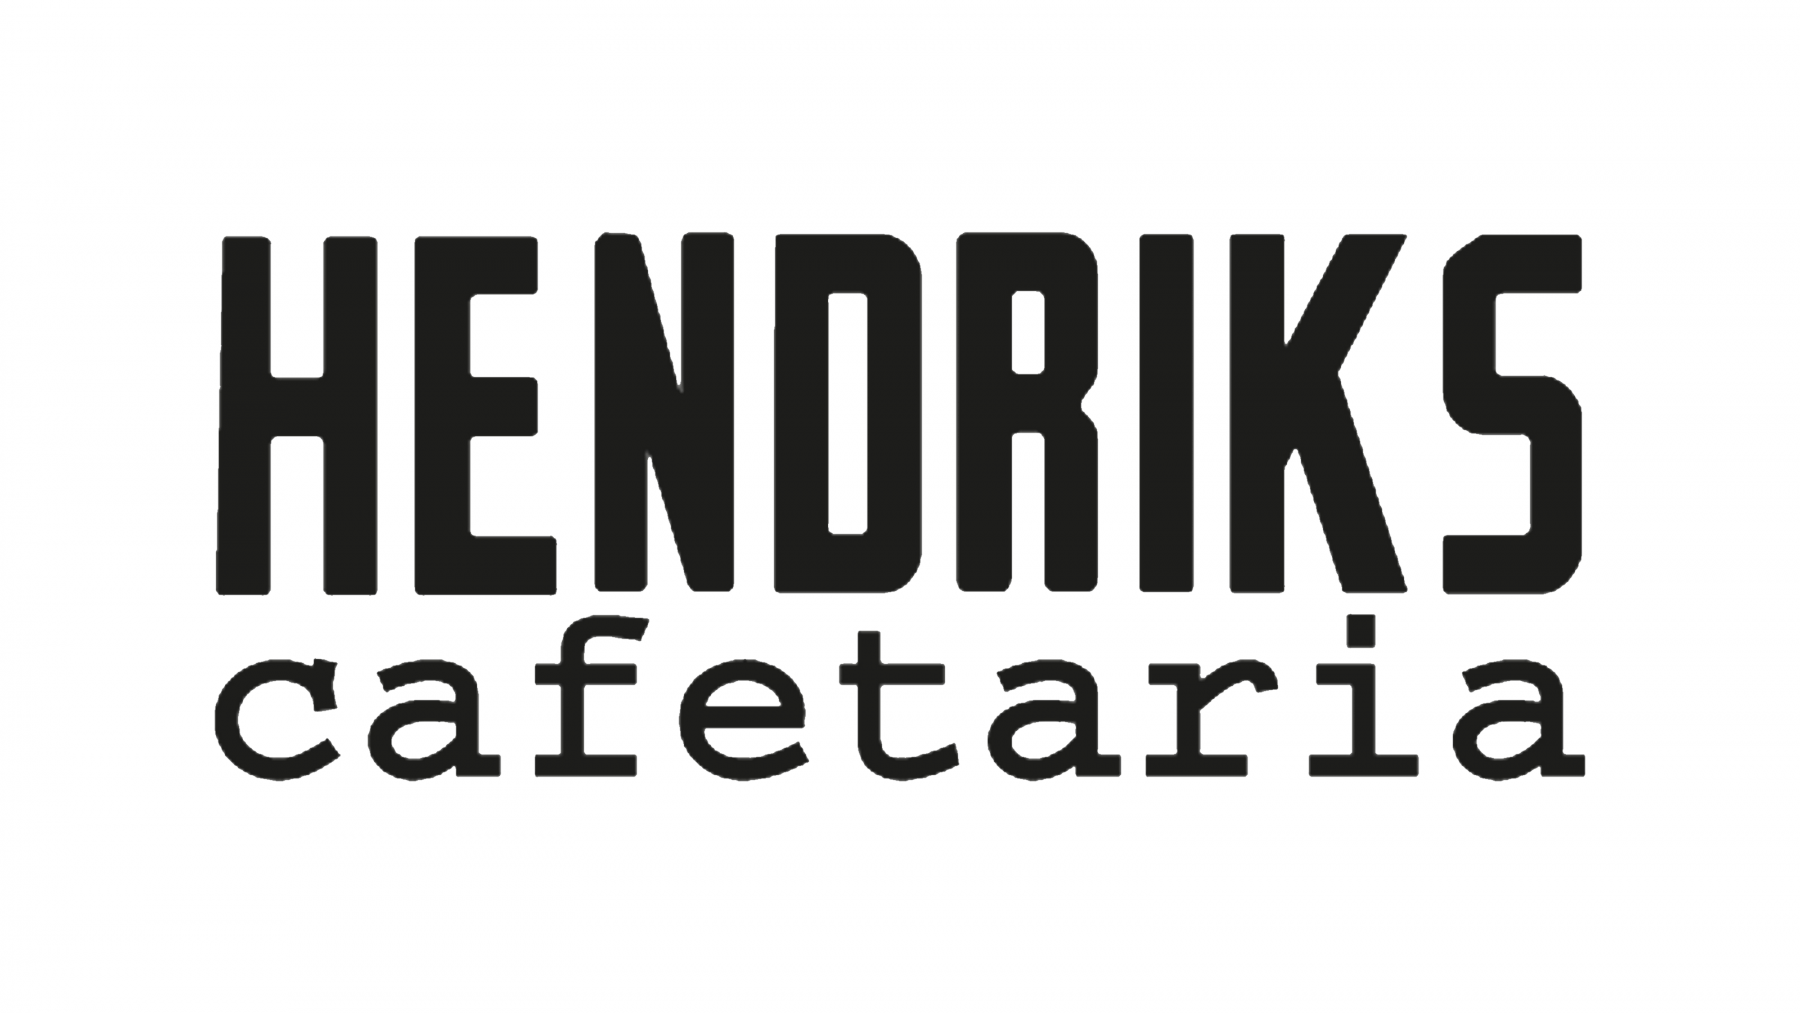 Cafetaria Hendriks